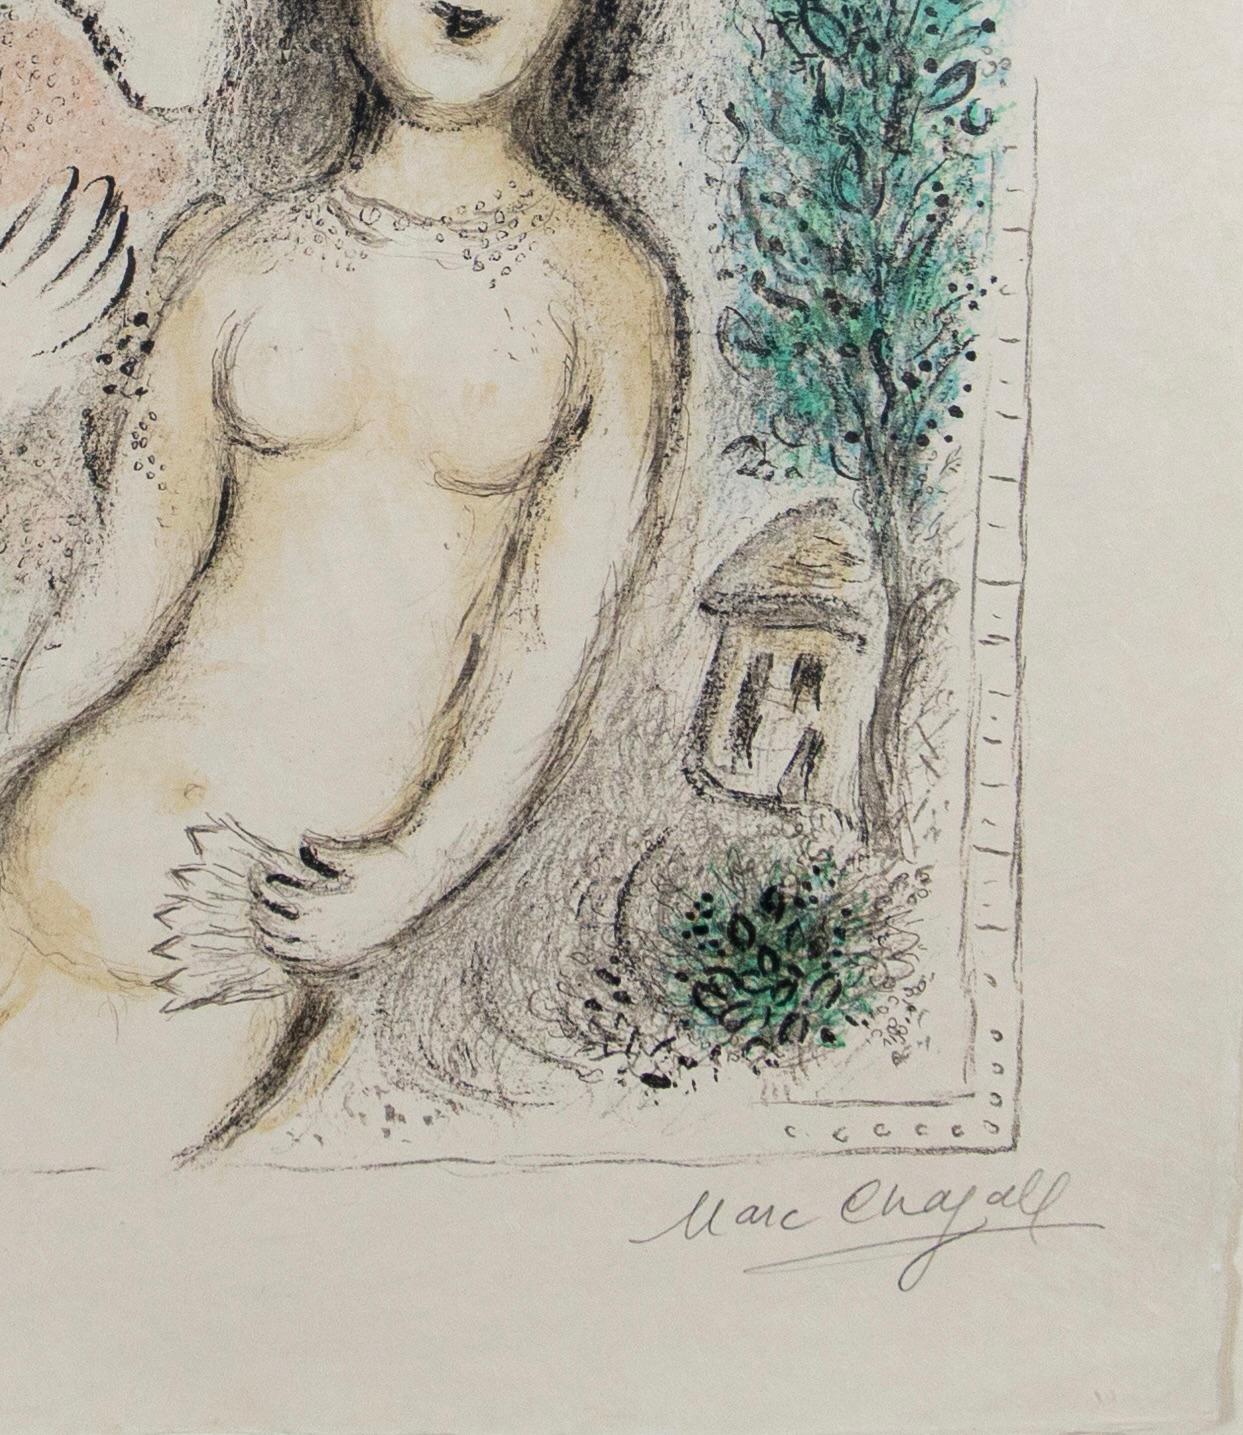 Marc Chagall
